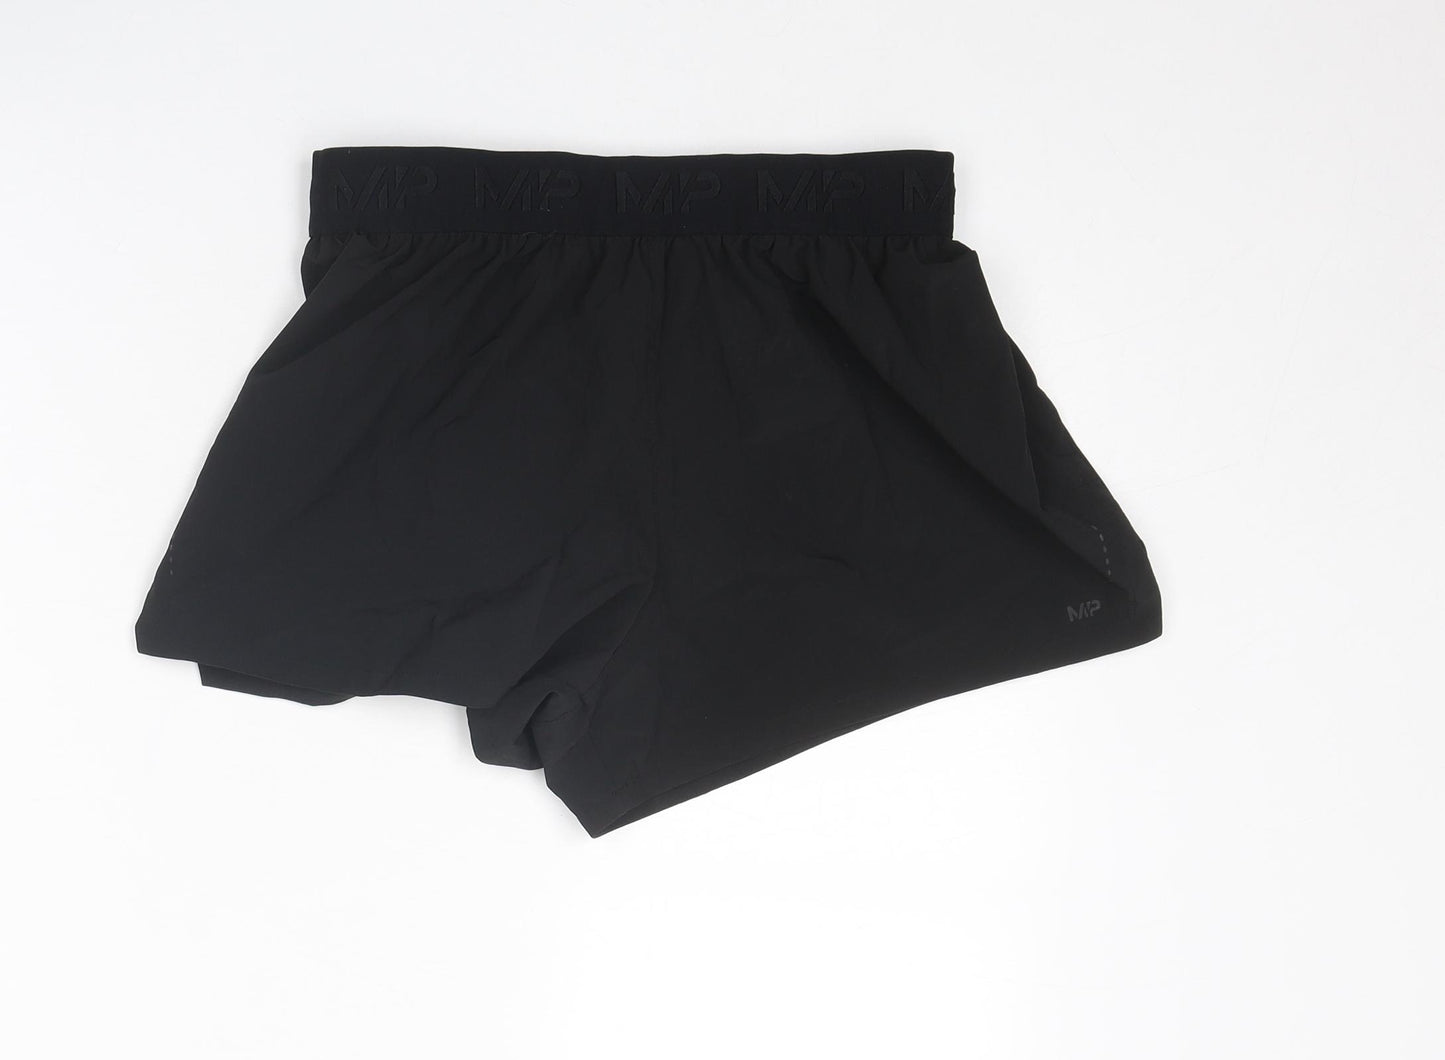 Myprotein Womens Black Polyester Athletic Shorts Size M Regular Drawstring